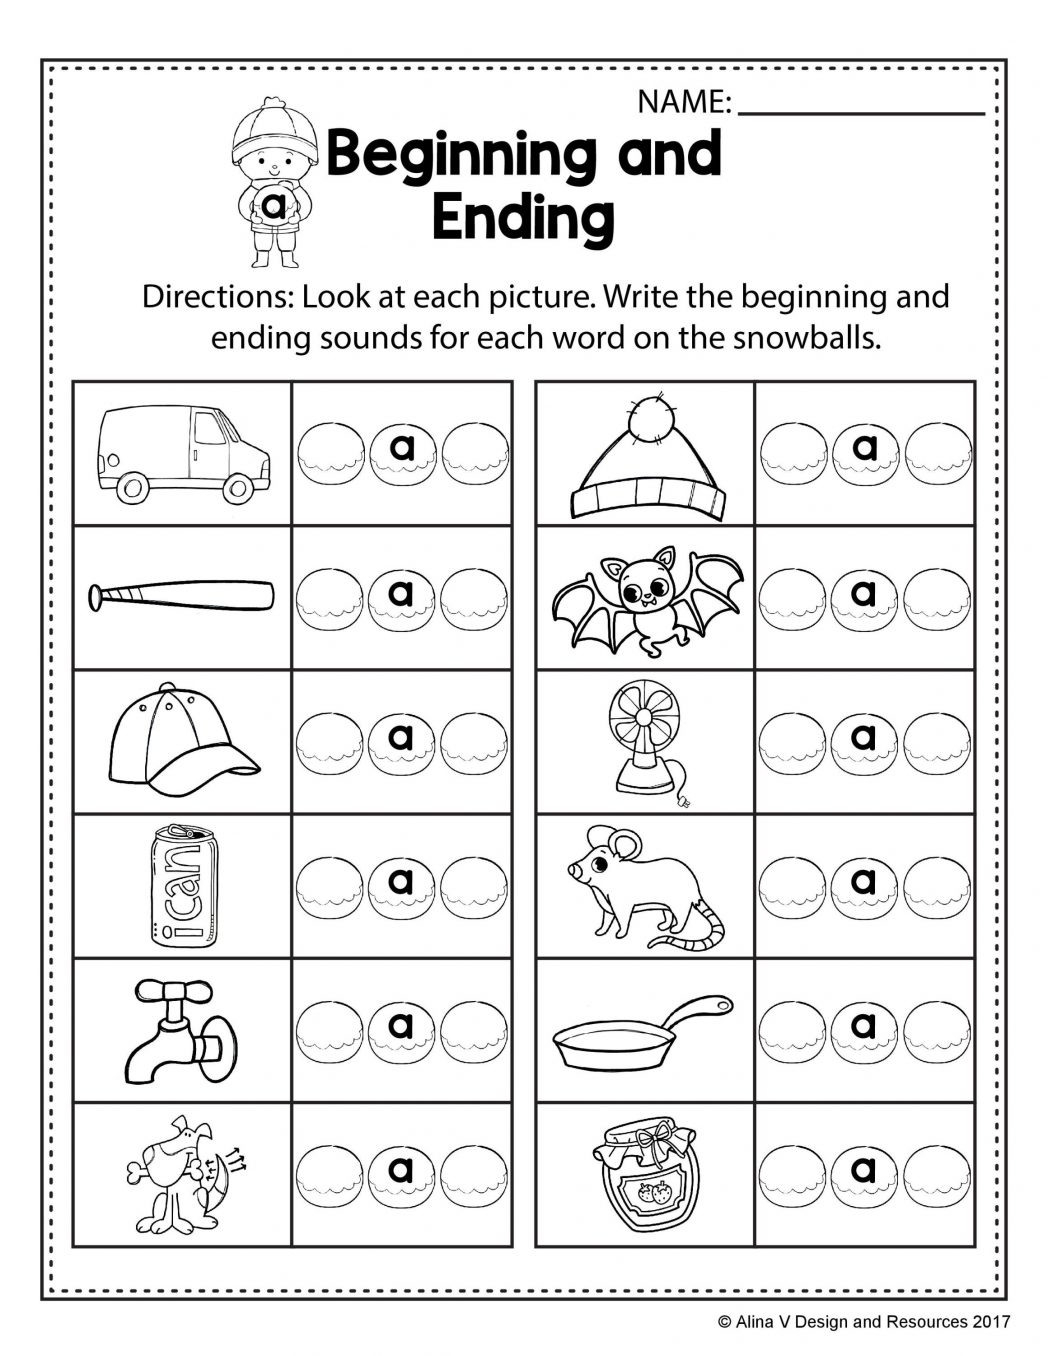 Phonics Worksheet Kindergarten Worksheet24